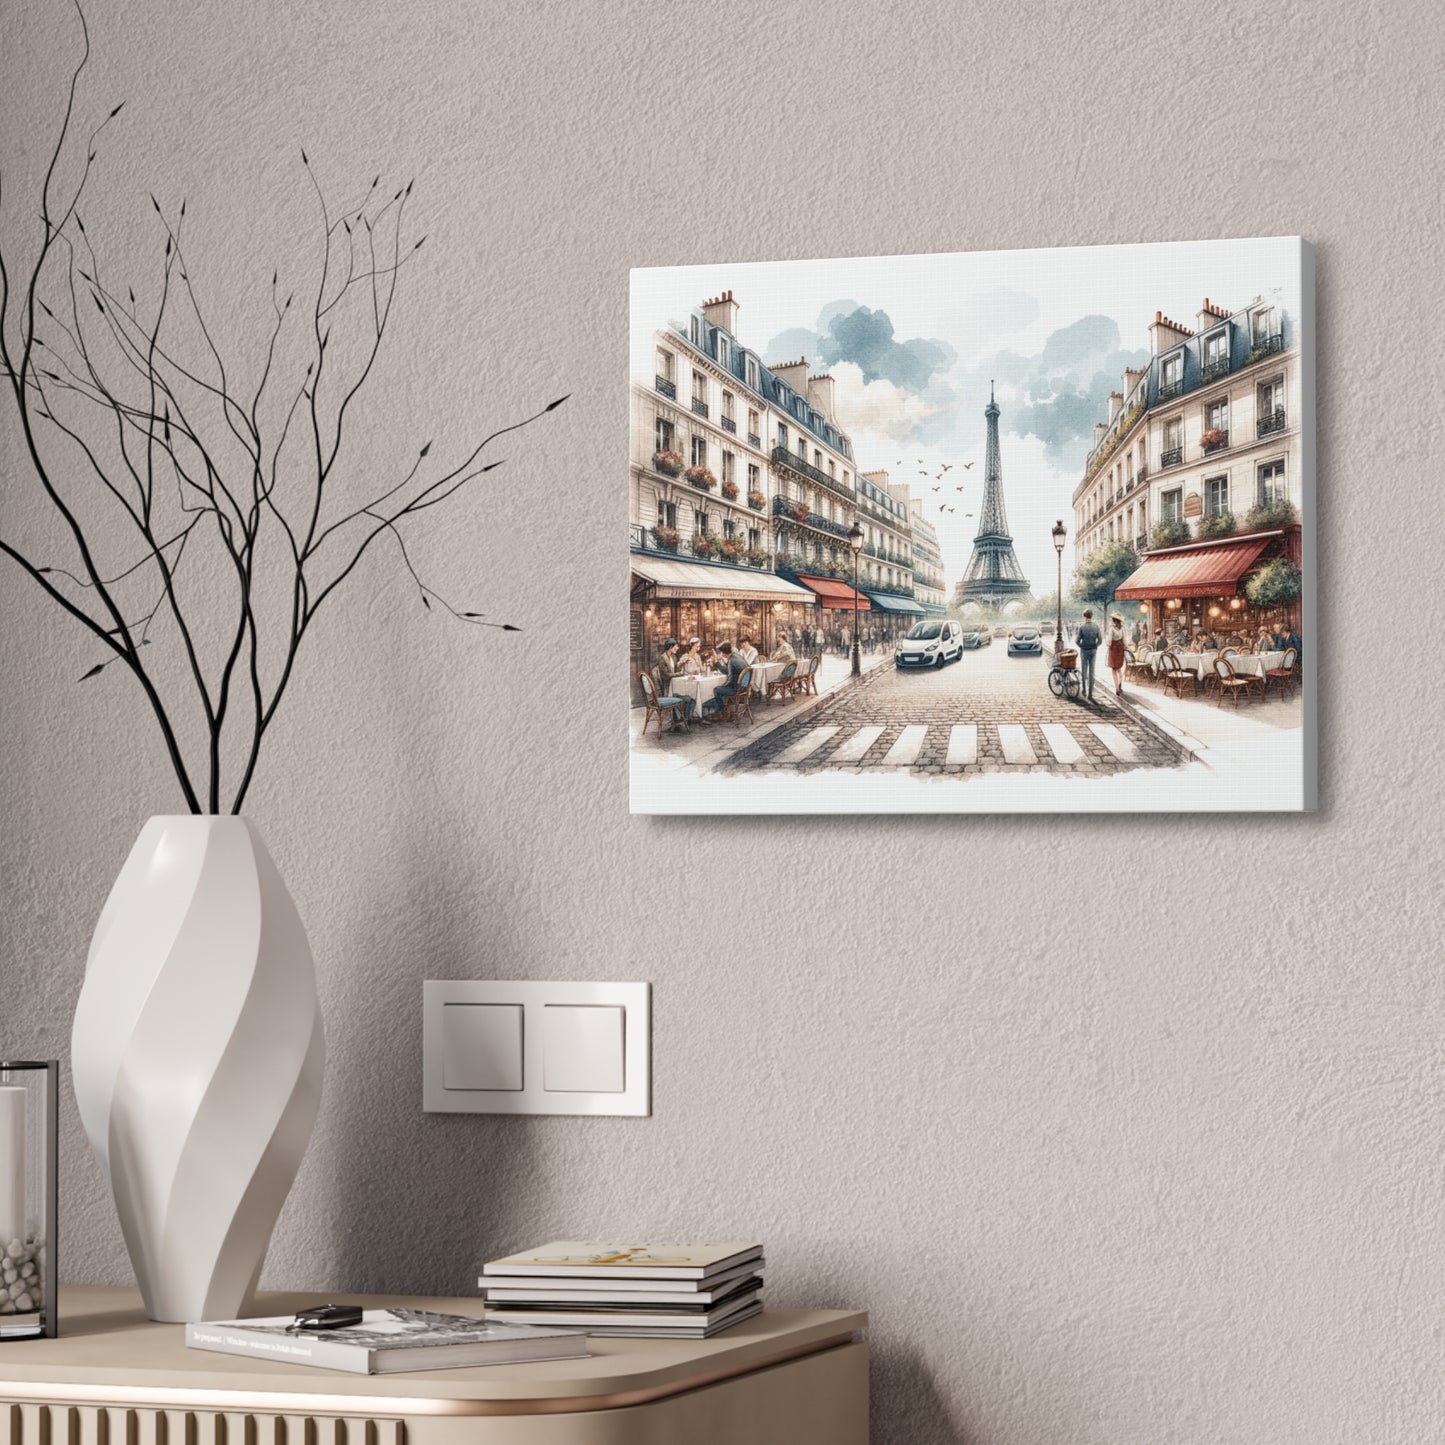 Parisian Elegance Canvas Art - Romantic Street Scene with Eiffel Tower